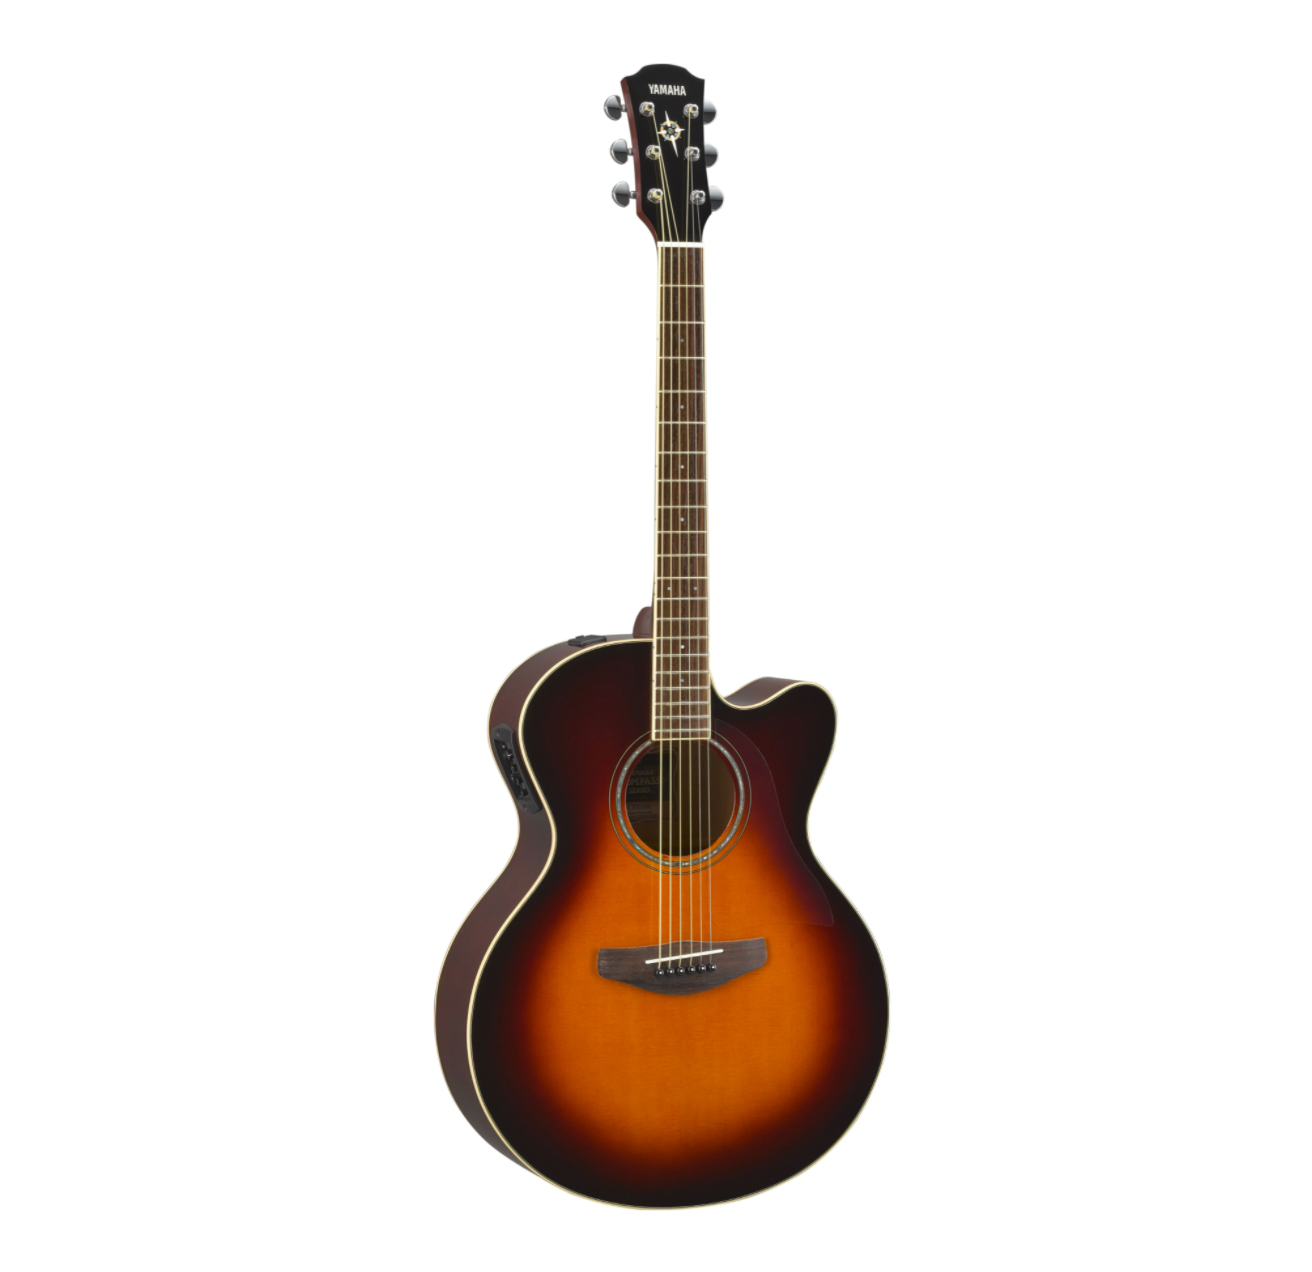 Yamaha CPX600 Acoustic Guitar - Vintage Tint